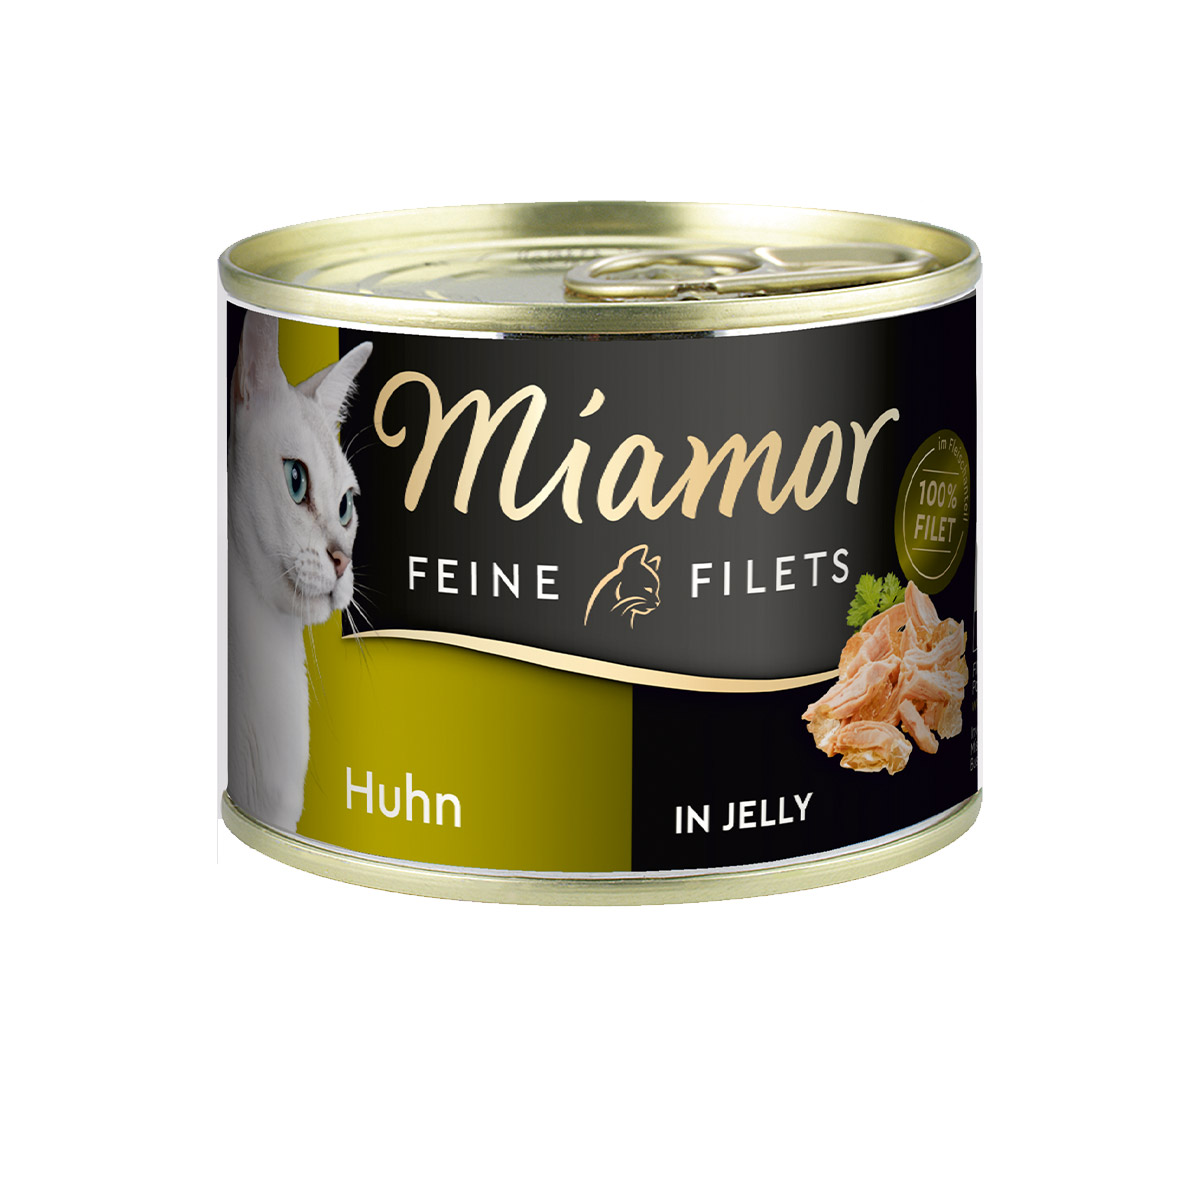 Miamor Feine Filets Huhn in Jelly 12x185g